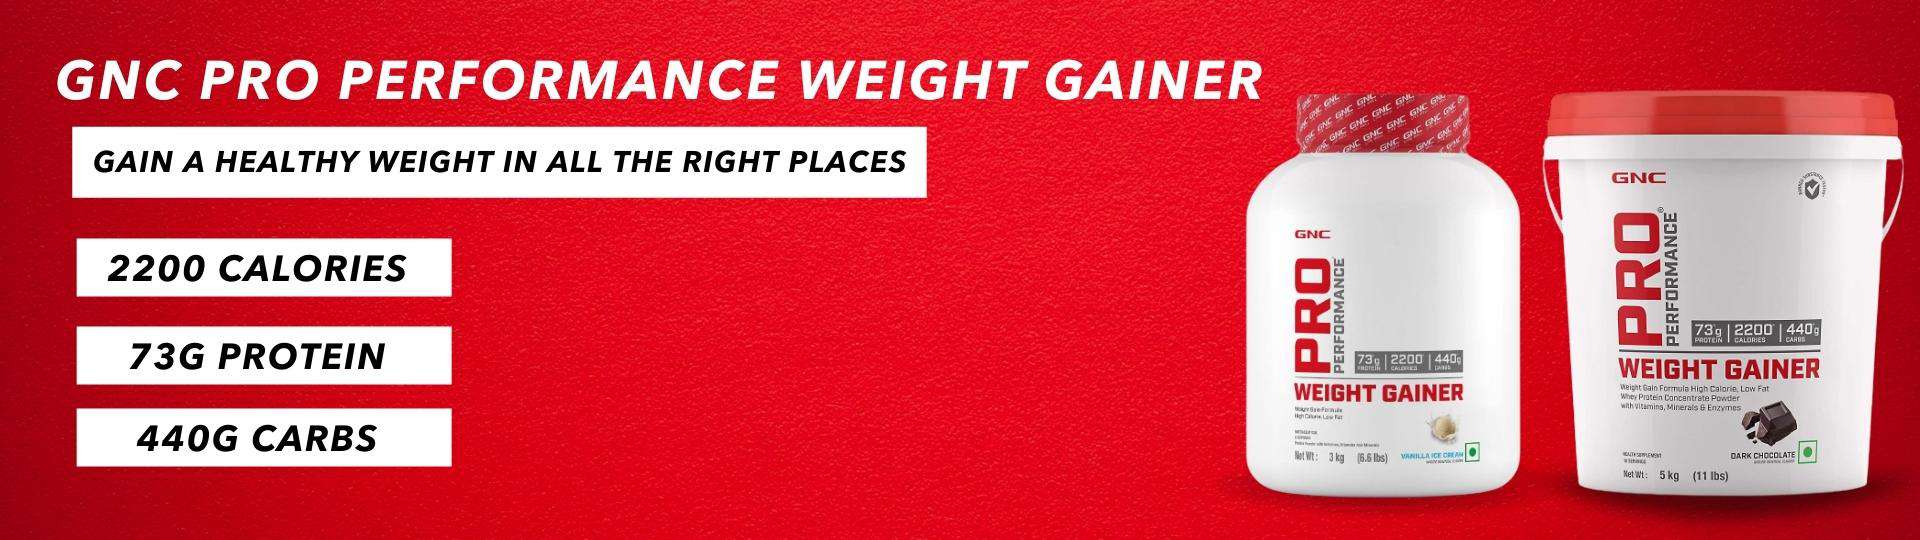 GNC Weight Gainer